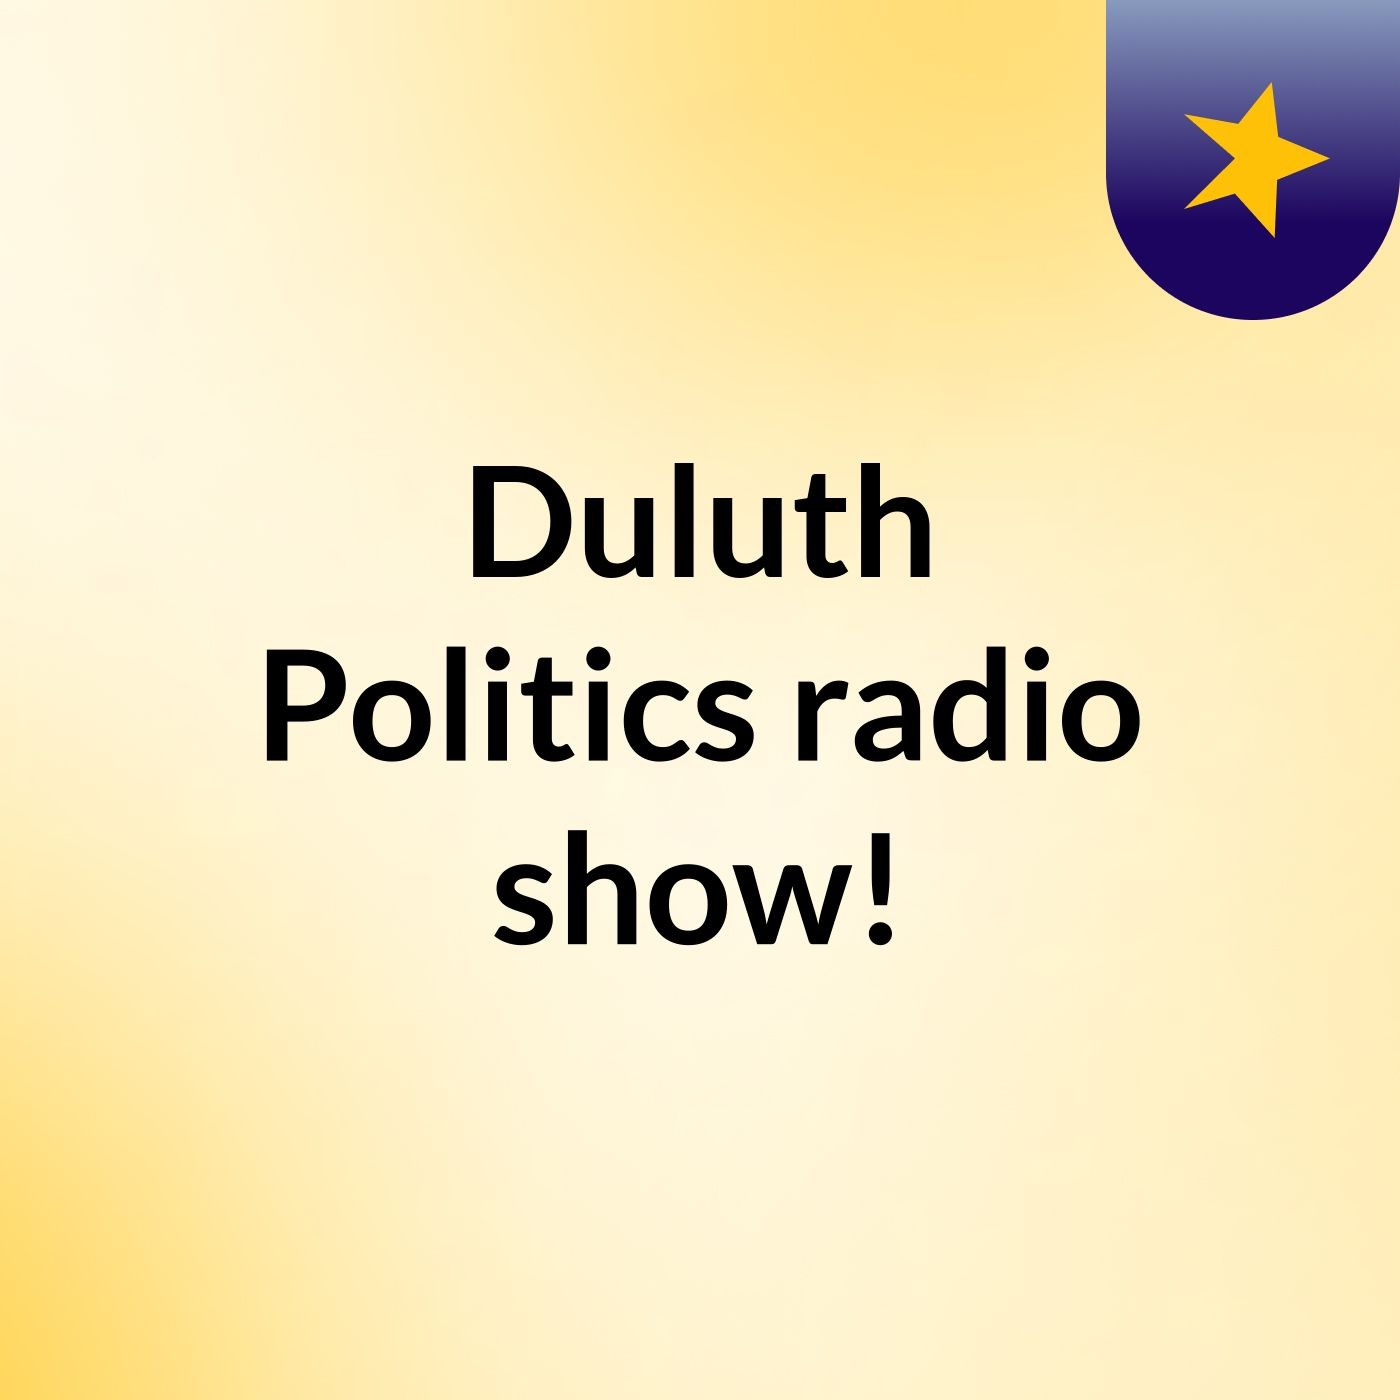 Duluth Politics radio show!